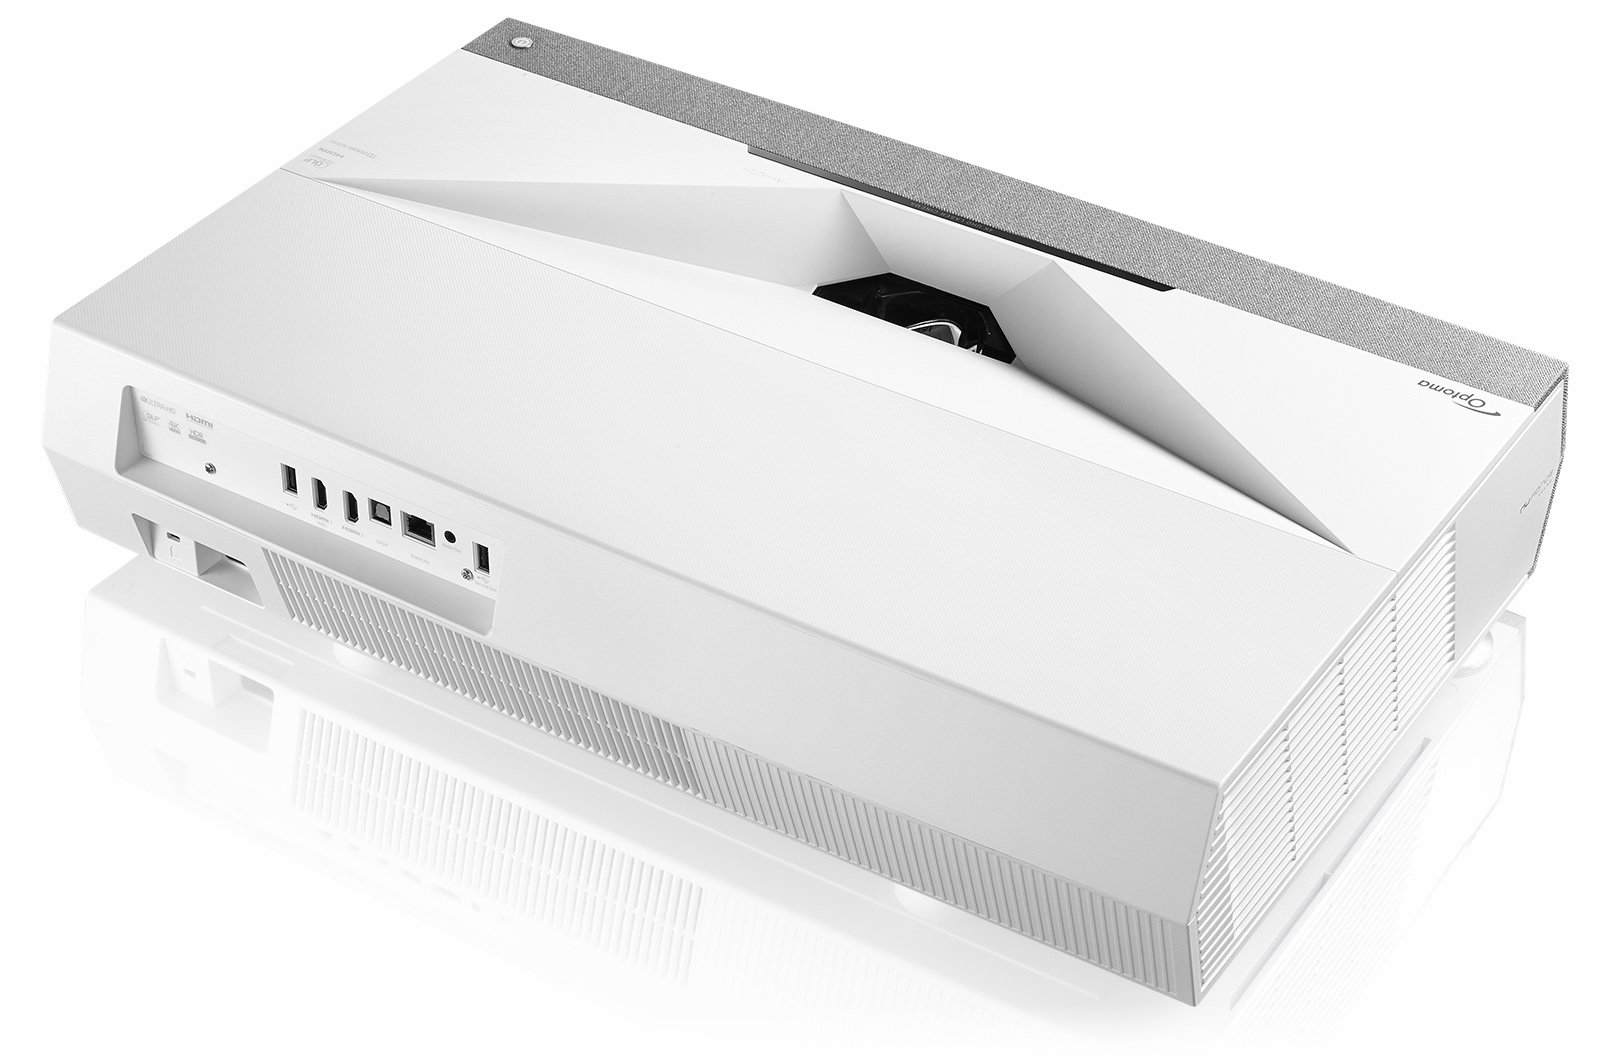 Проектор Optoma P2 CinemaX лазерный для дом.кинотеатра; DLP; 4KUHD (3840x2160);3000 ANSI Lm;2000000:1;TR 0.25:1; 2xHDMI 2.0; USB-A; RJ45; 1xHDMI 1.4a поддержка 3D;1xS/PDIF,USB-A 1.5A (пит), Аудио 3.5мм out;1xUSB-A серв;10W;белый E1P0A46WE1Z1 E1P0A46WE1Z1